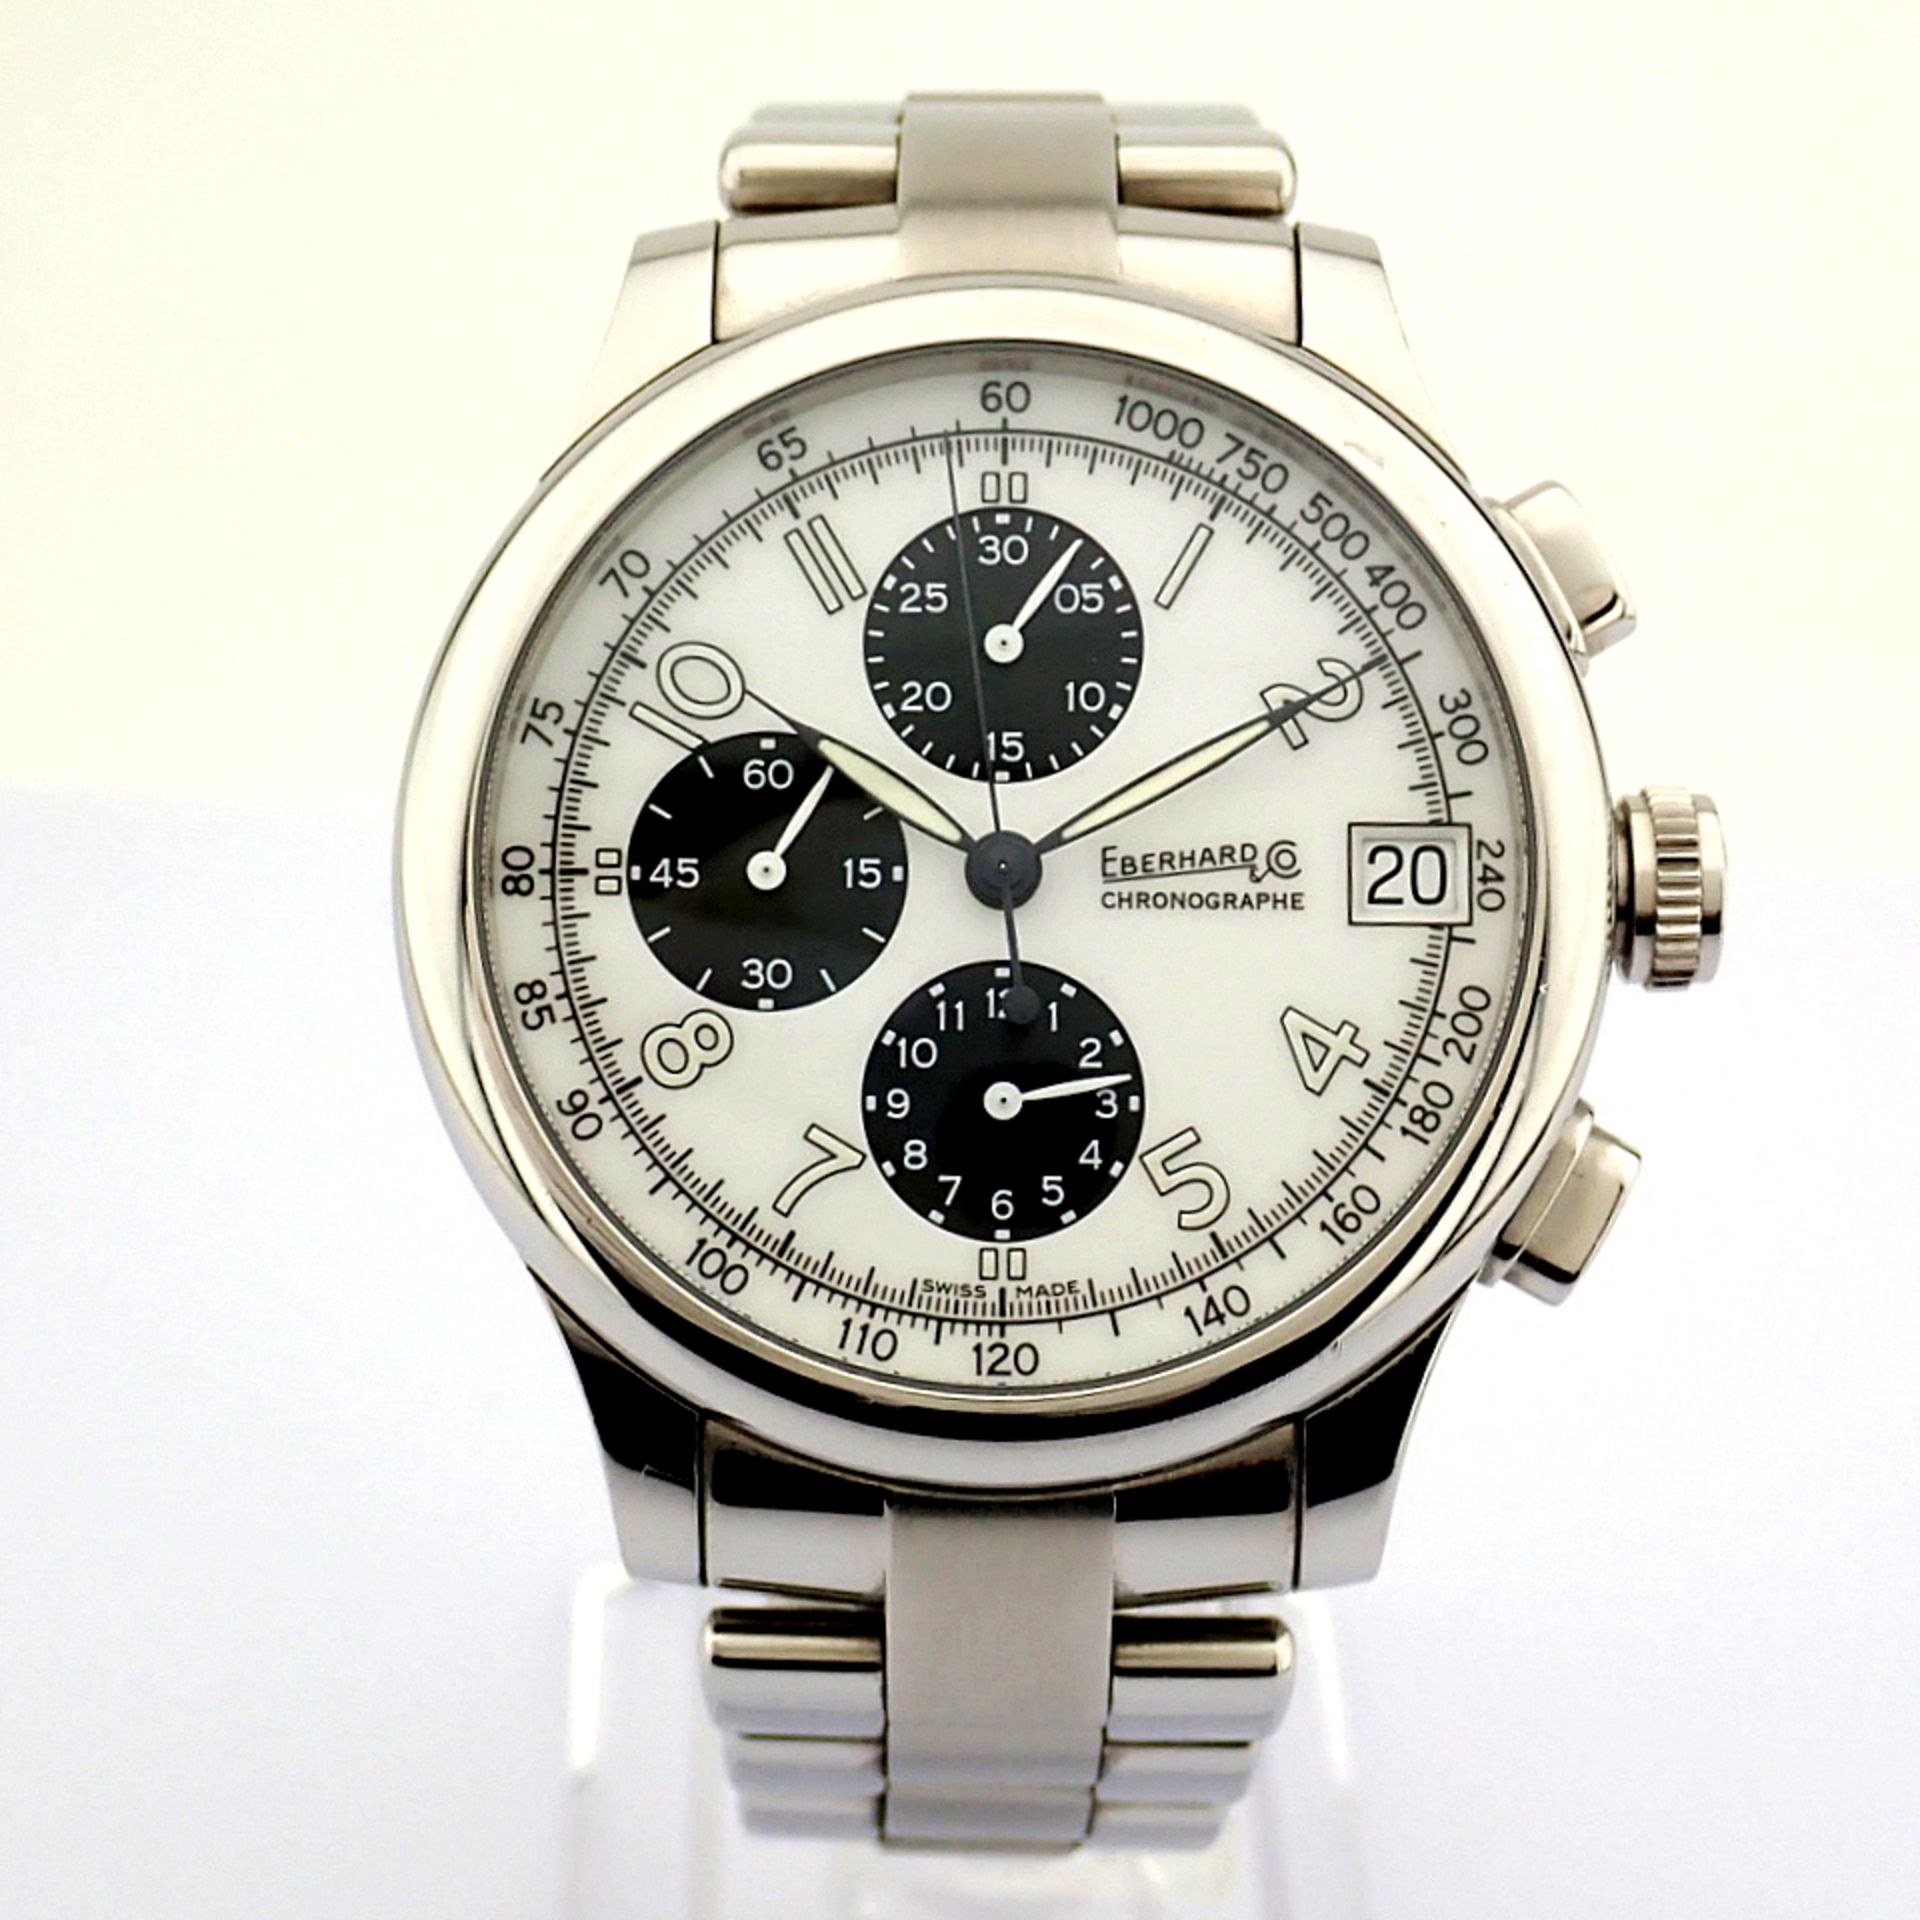 Eberhard & Co. / Traversetolo Chronograph Automatic - Gentlmen's Steel Wrist Watch - Image 4 of 11